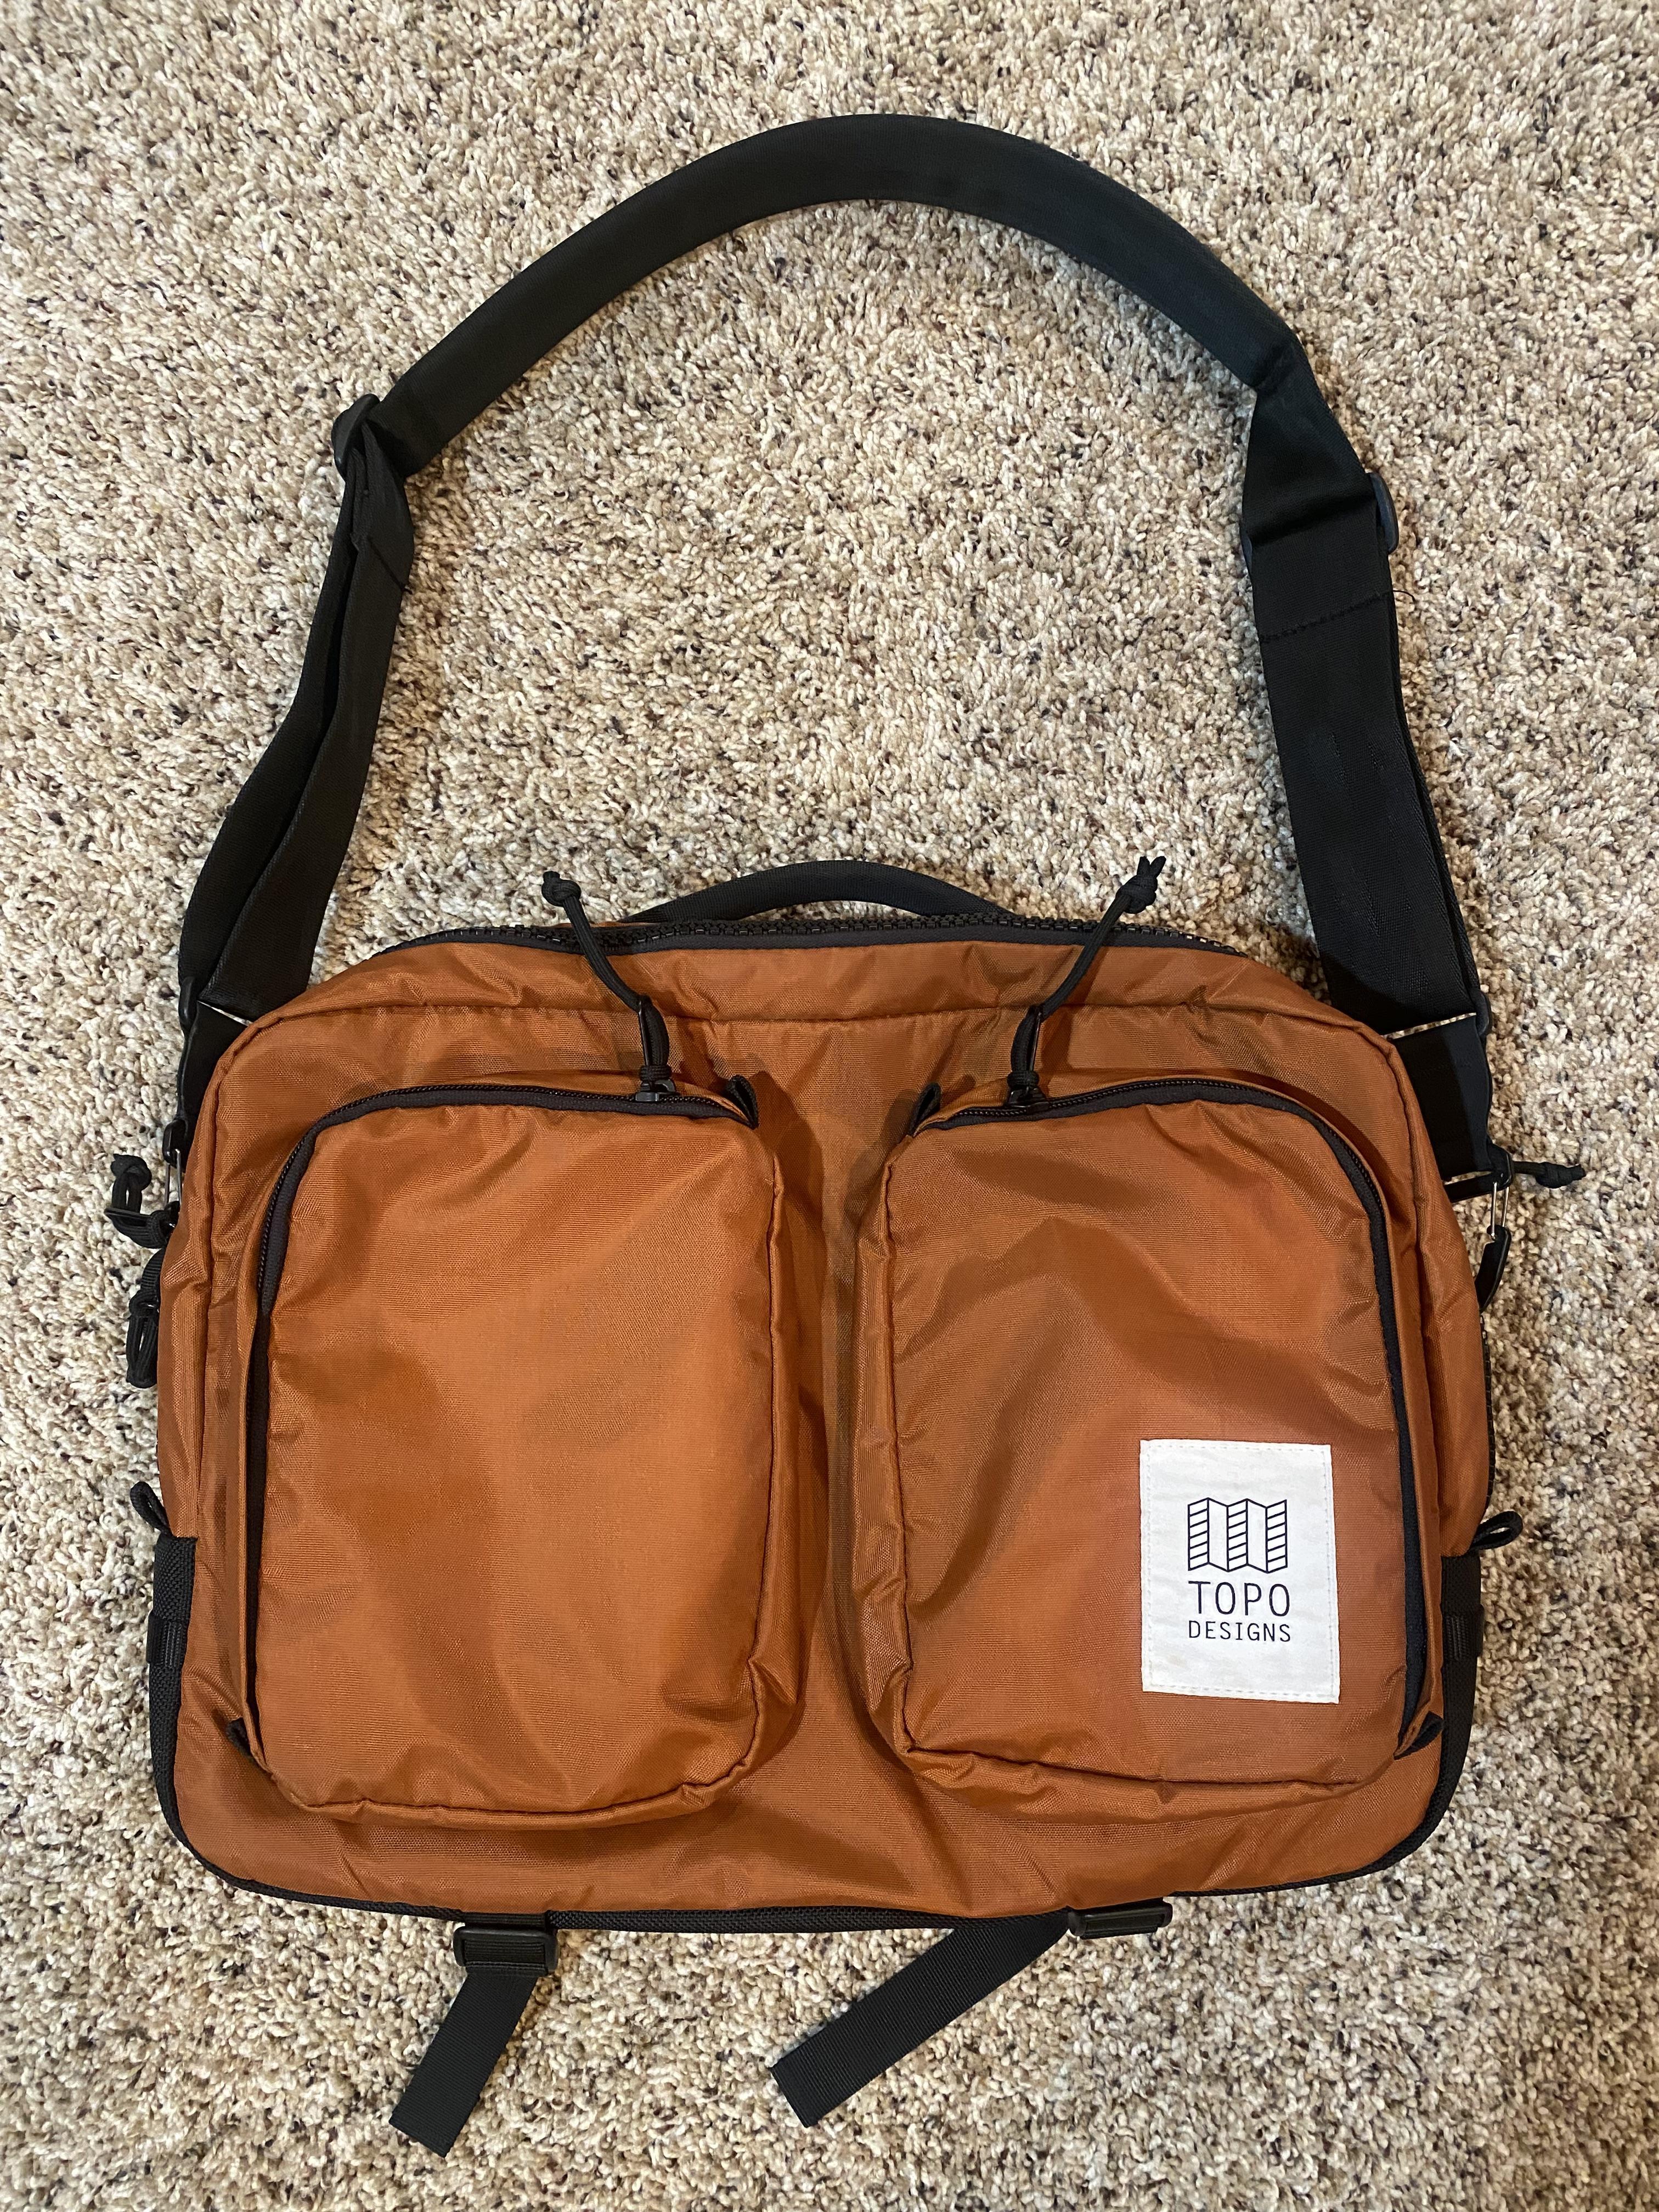 Topo Designs Computer / Travel Bag